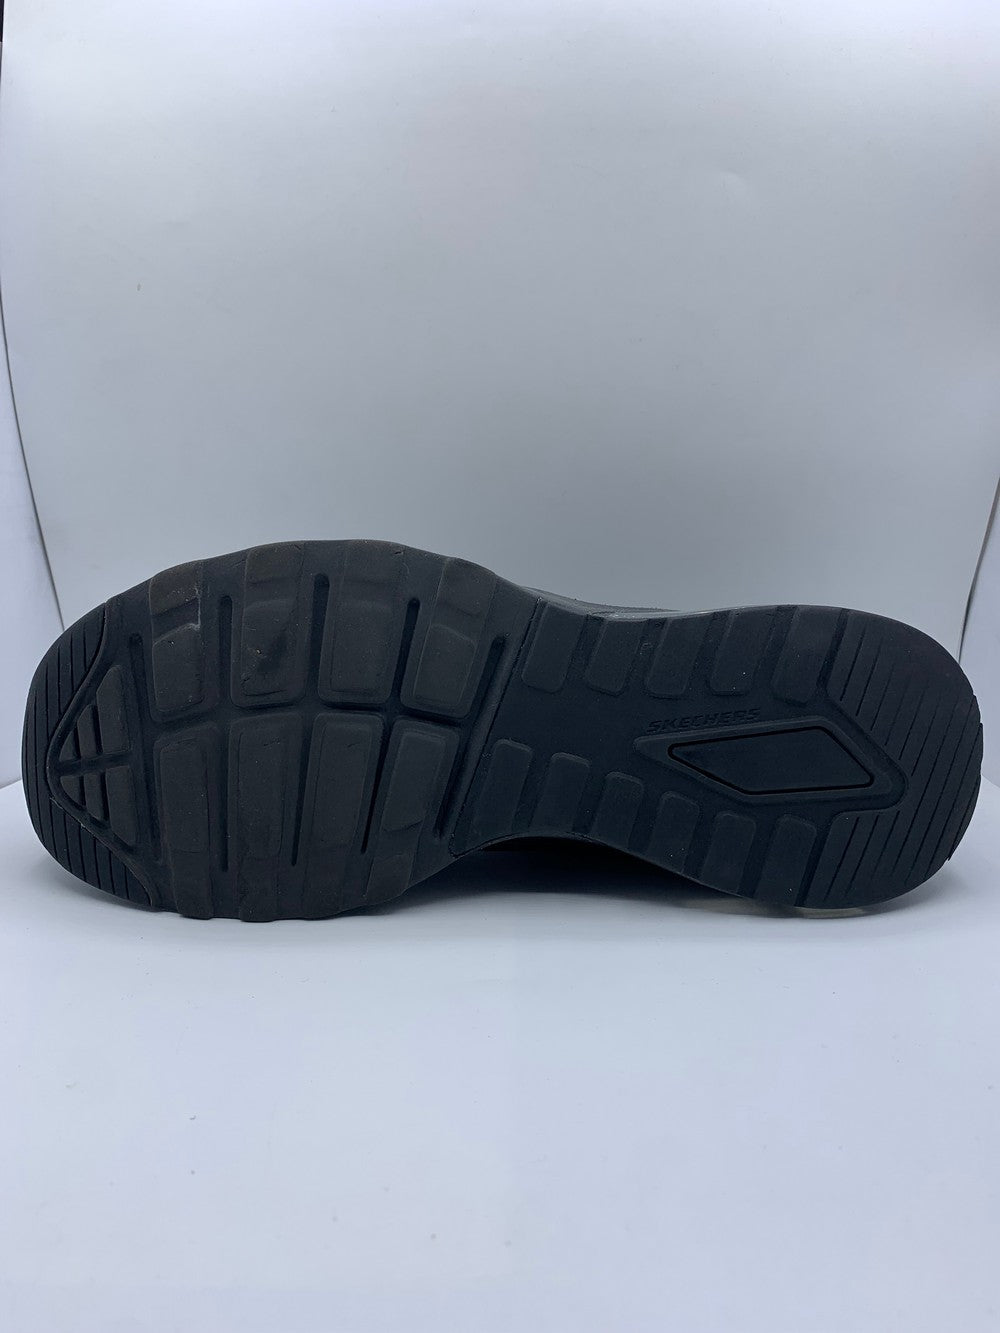 Skechers Skech Air Original Brand Sports Black Running Shoes For Men